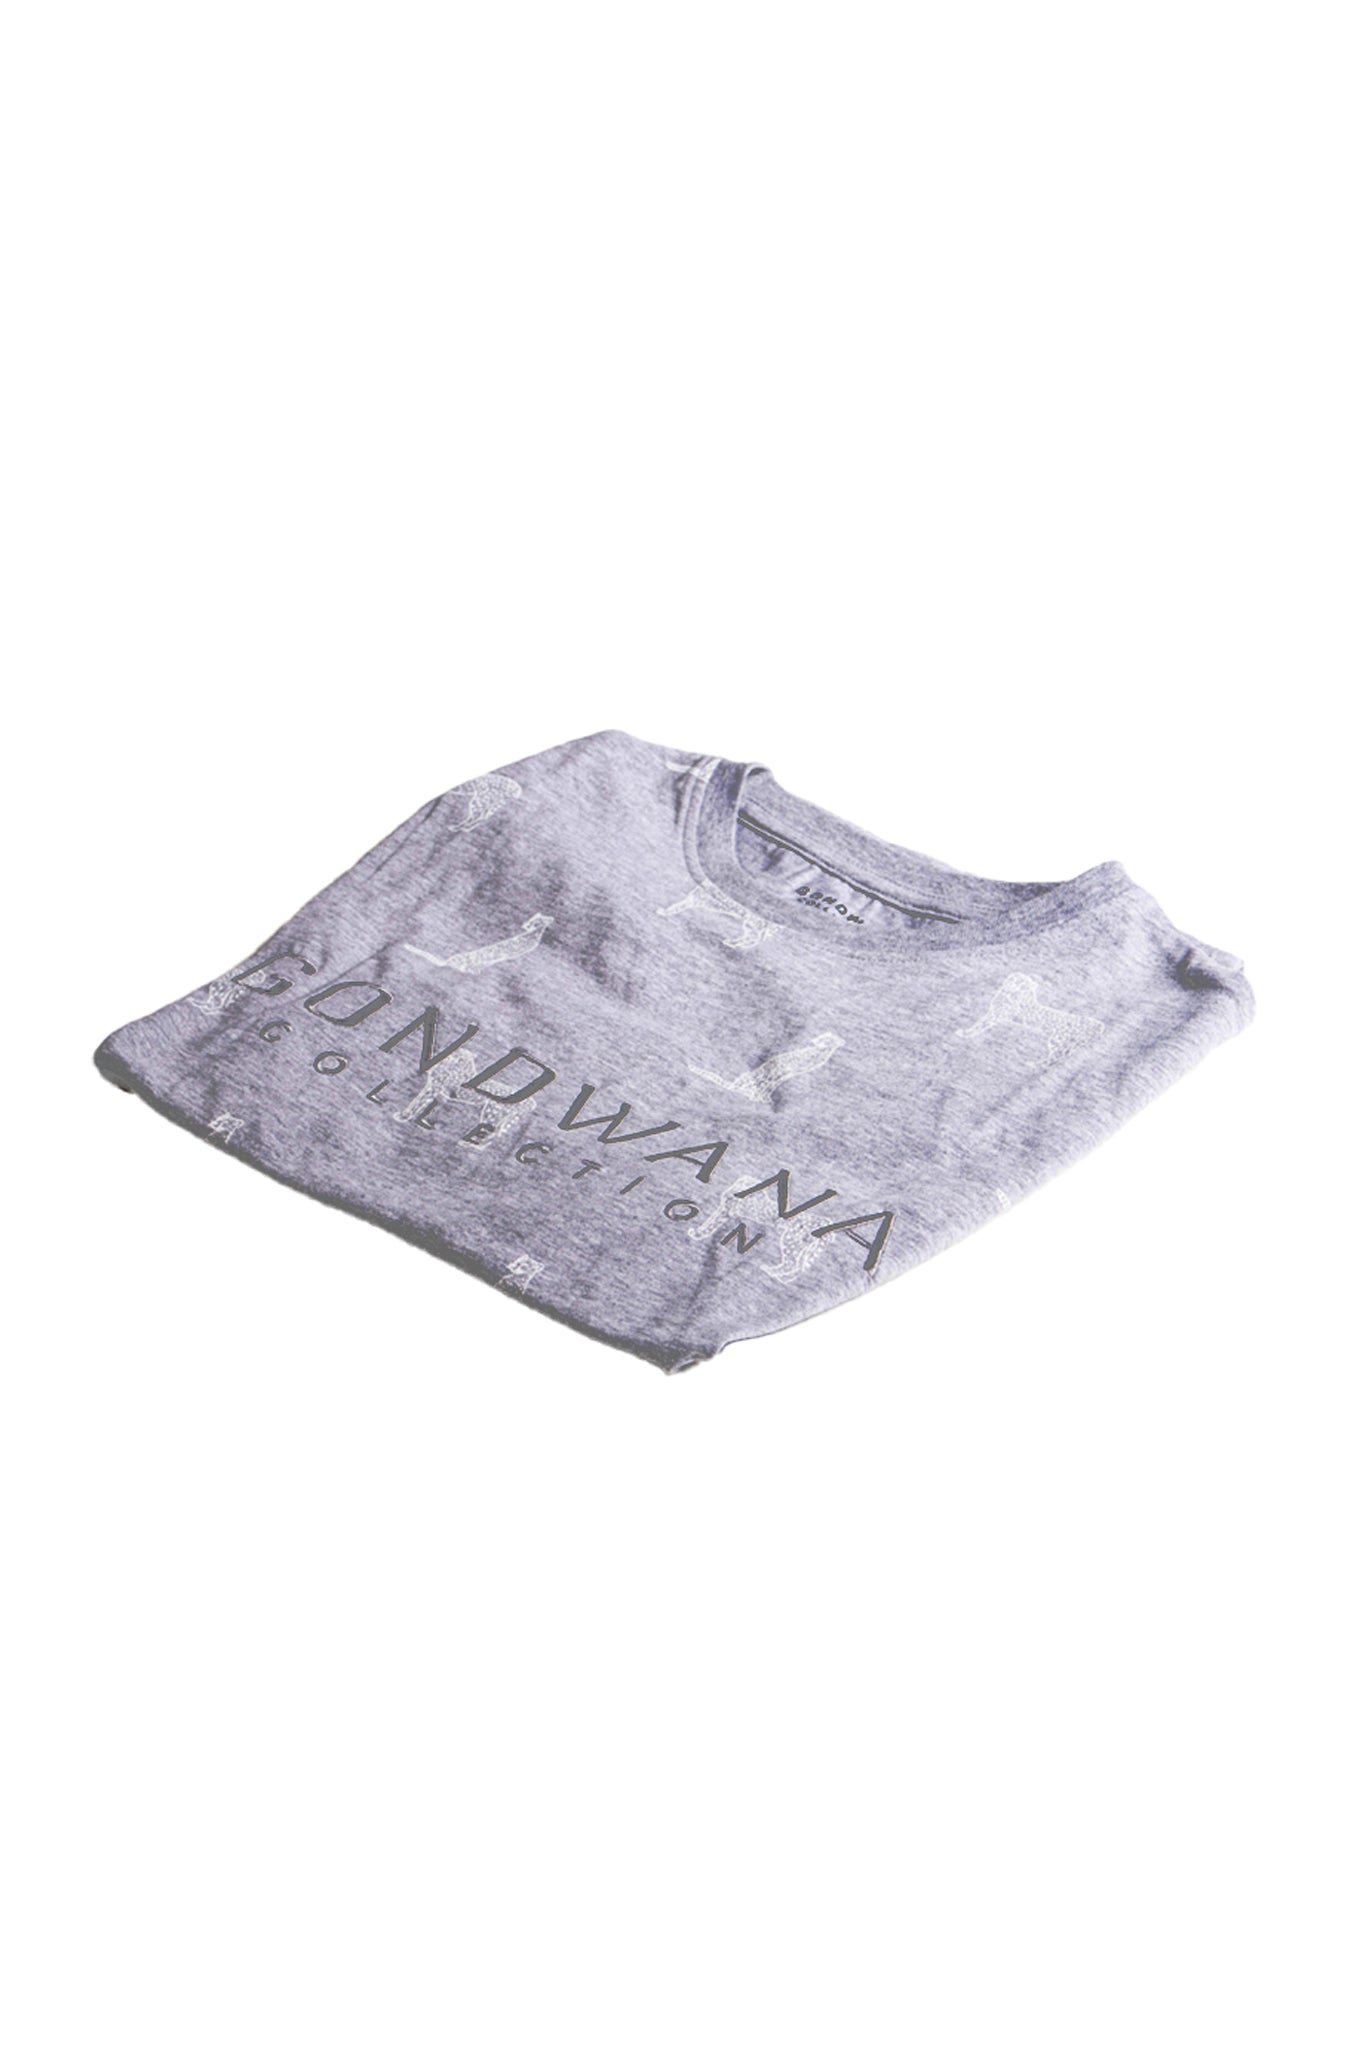 Gondwana Men's T-shirt Grey